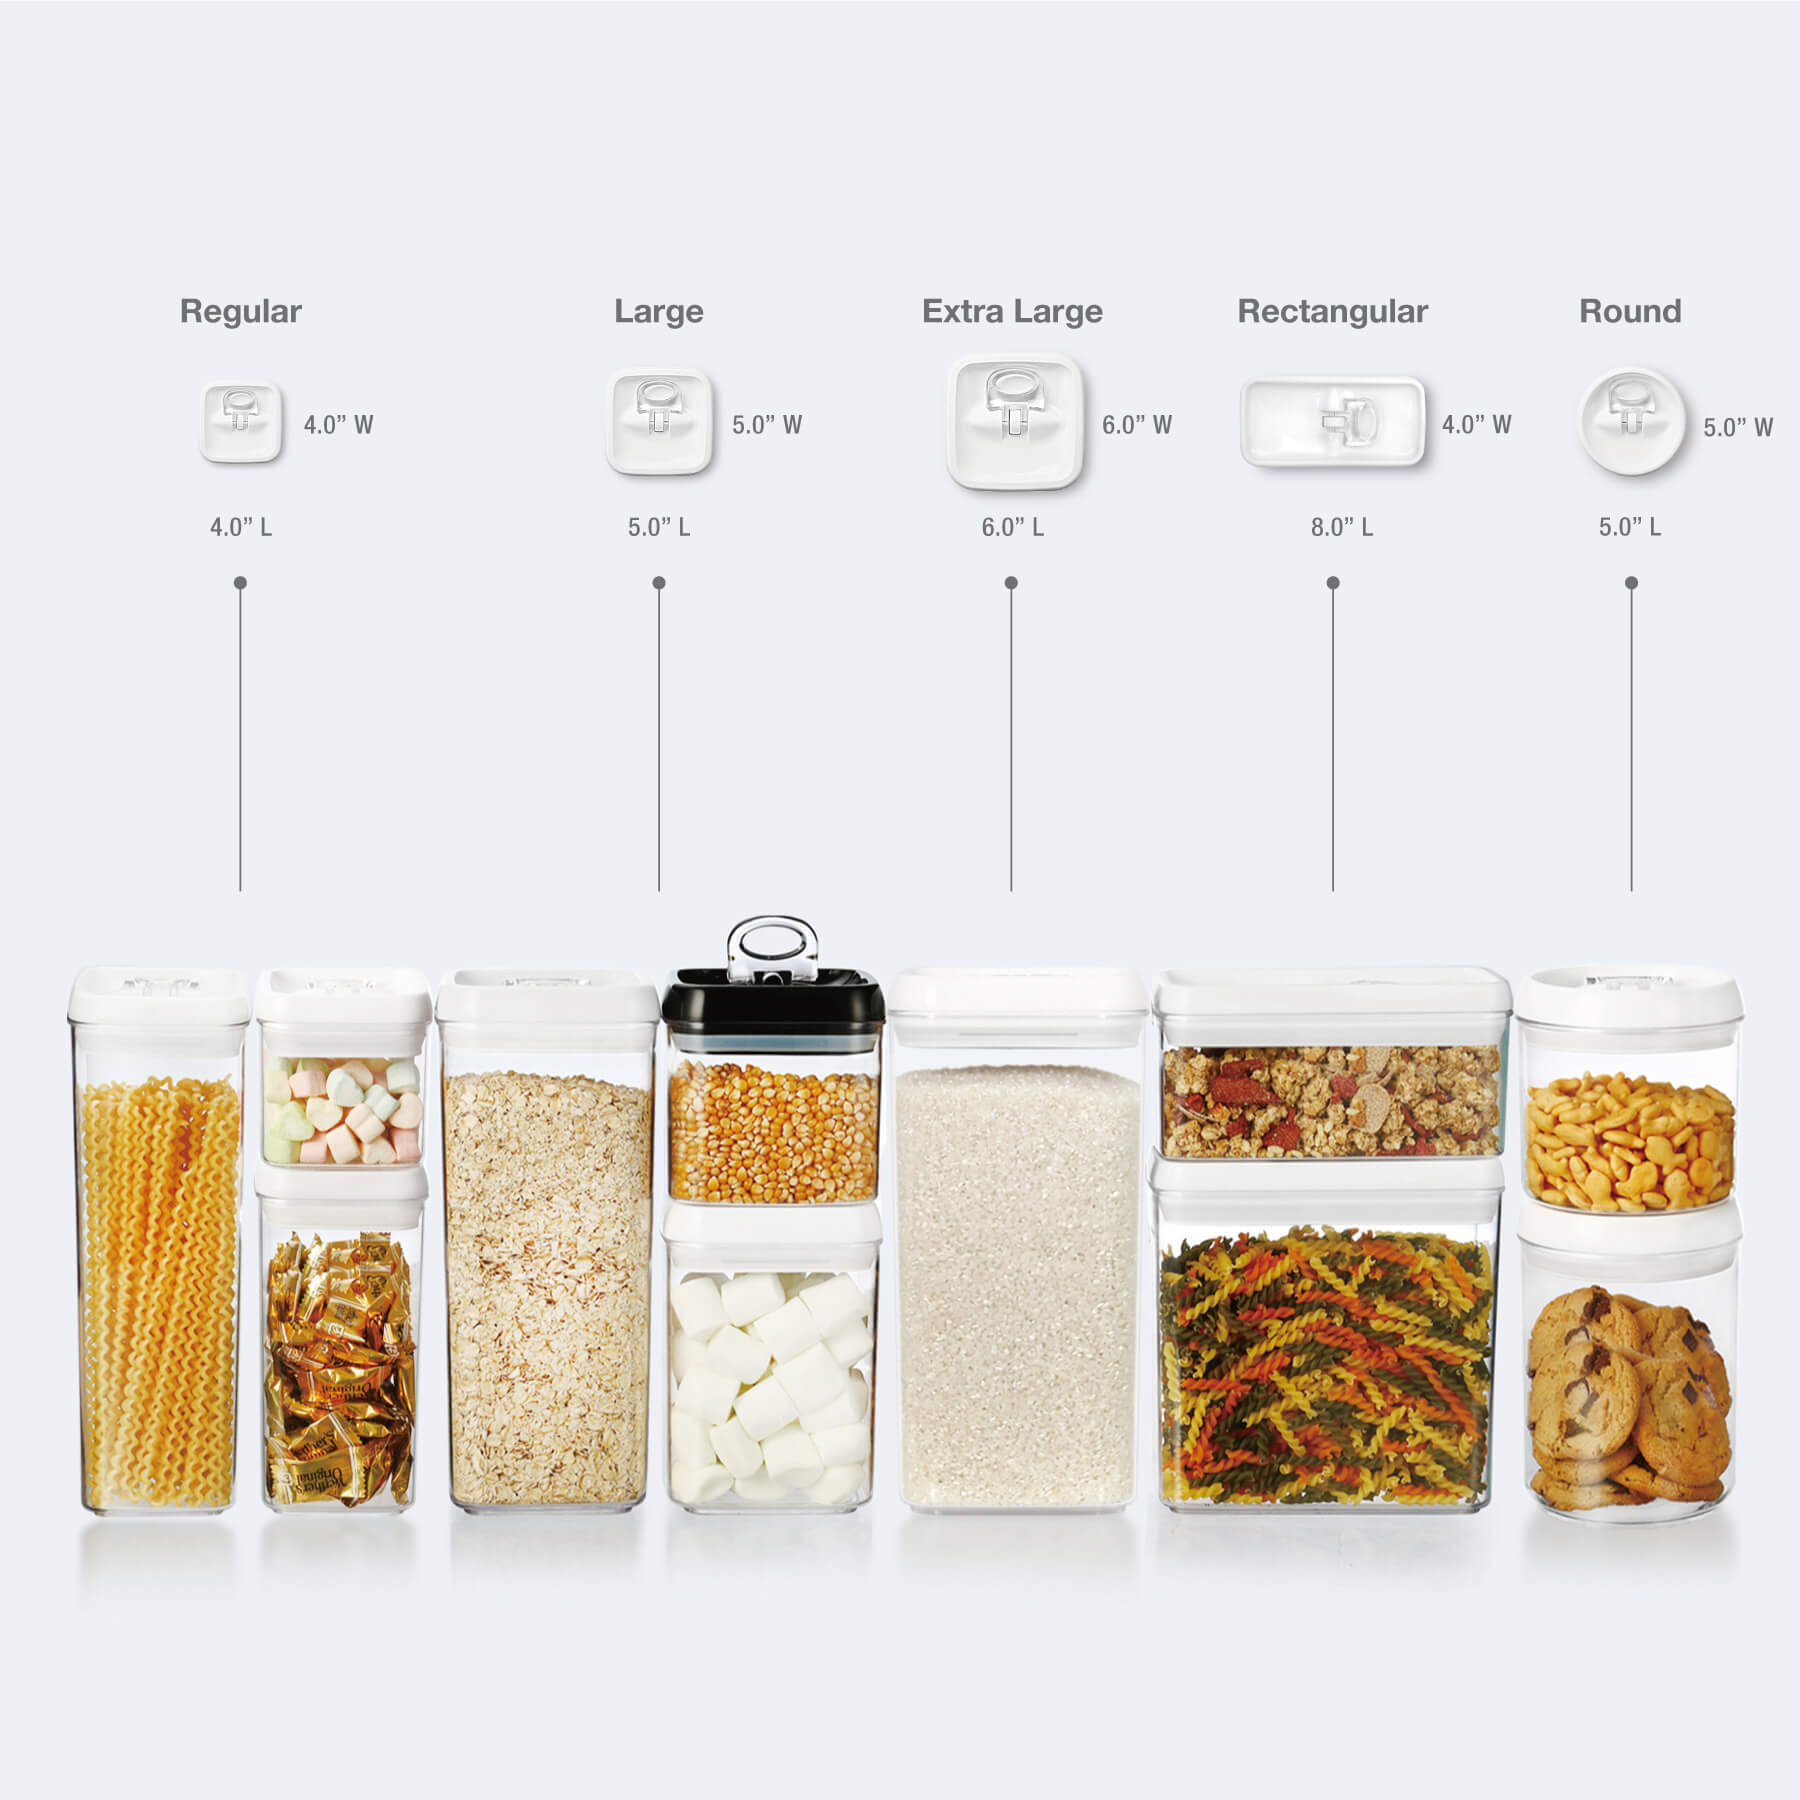 OXO Good Grips 1.1 Qt. Clear Square SAN Plastic Food Storage